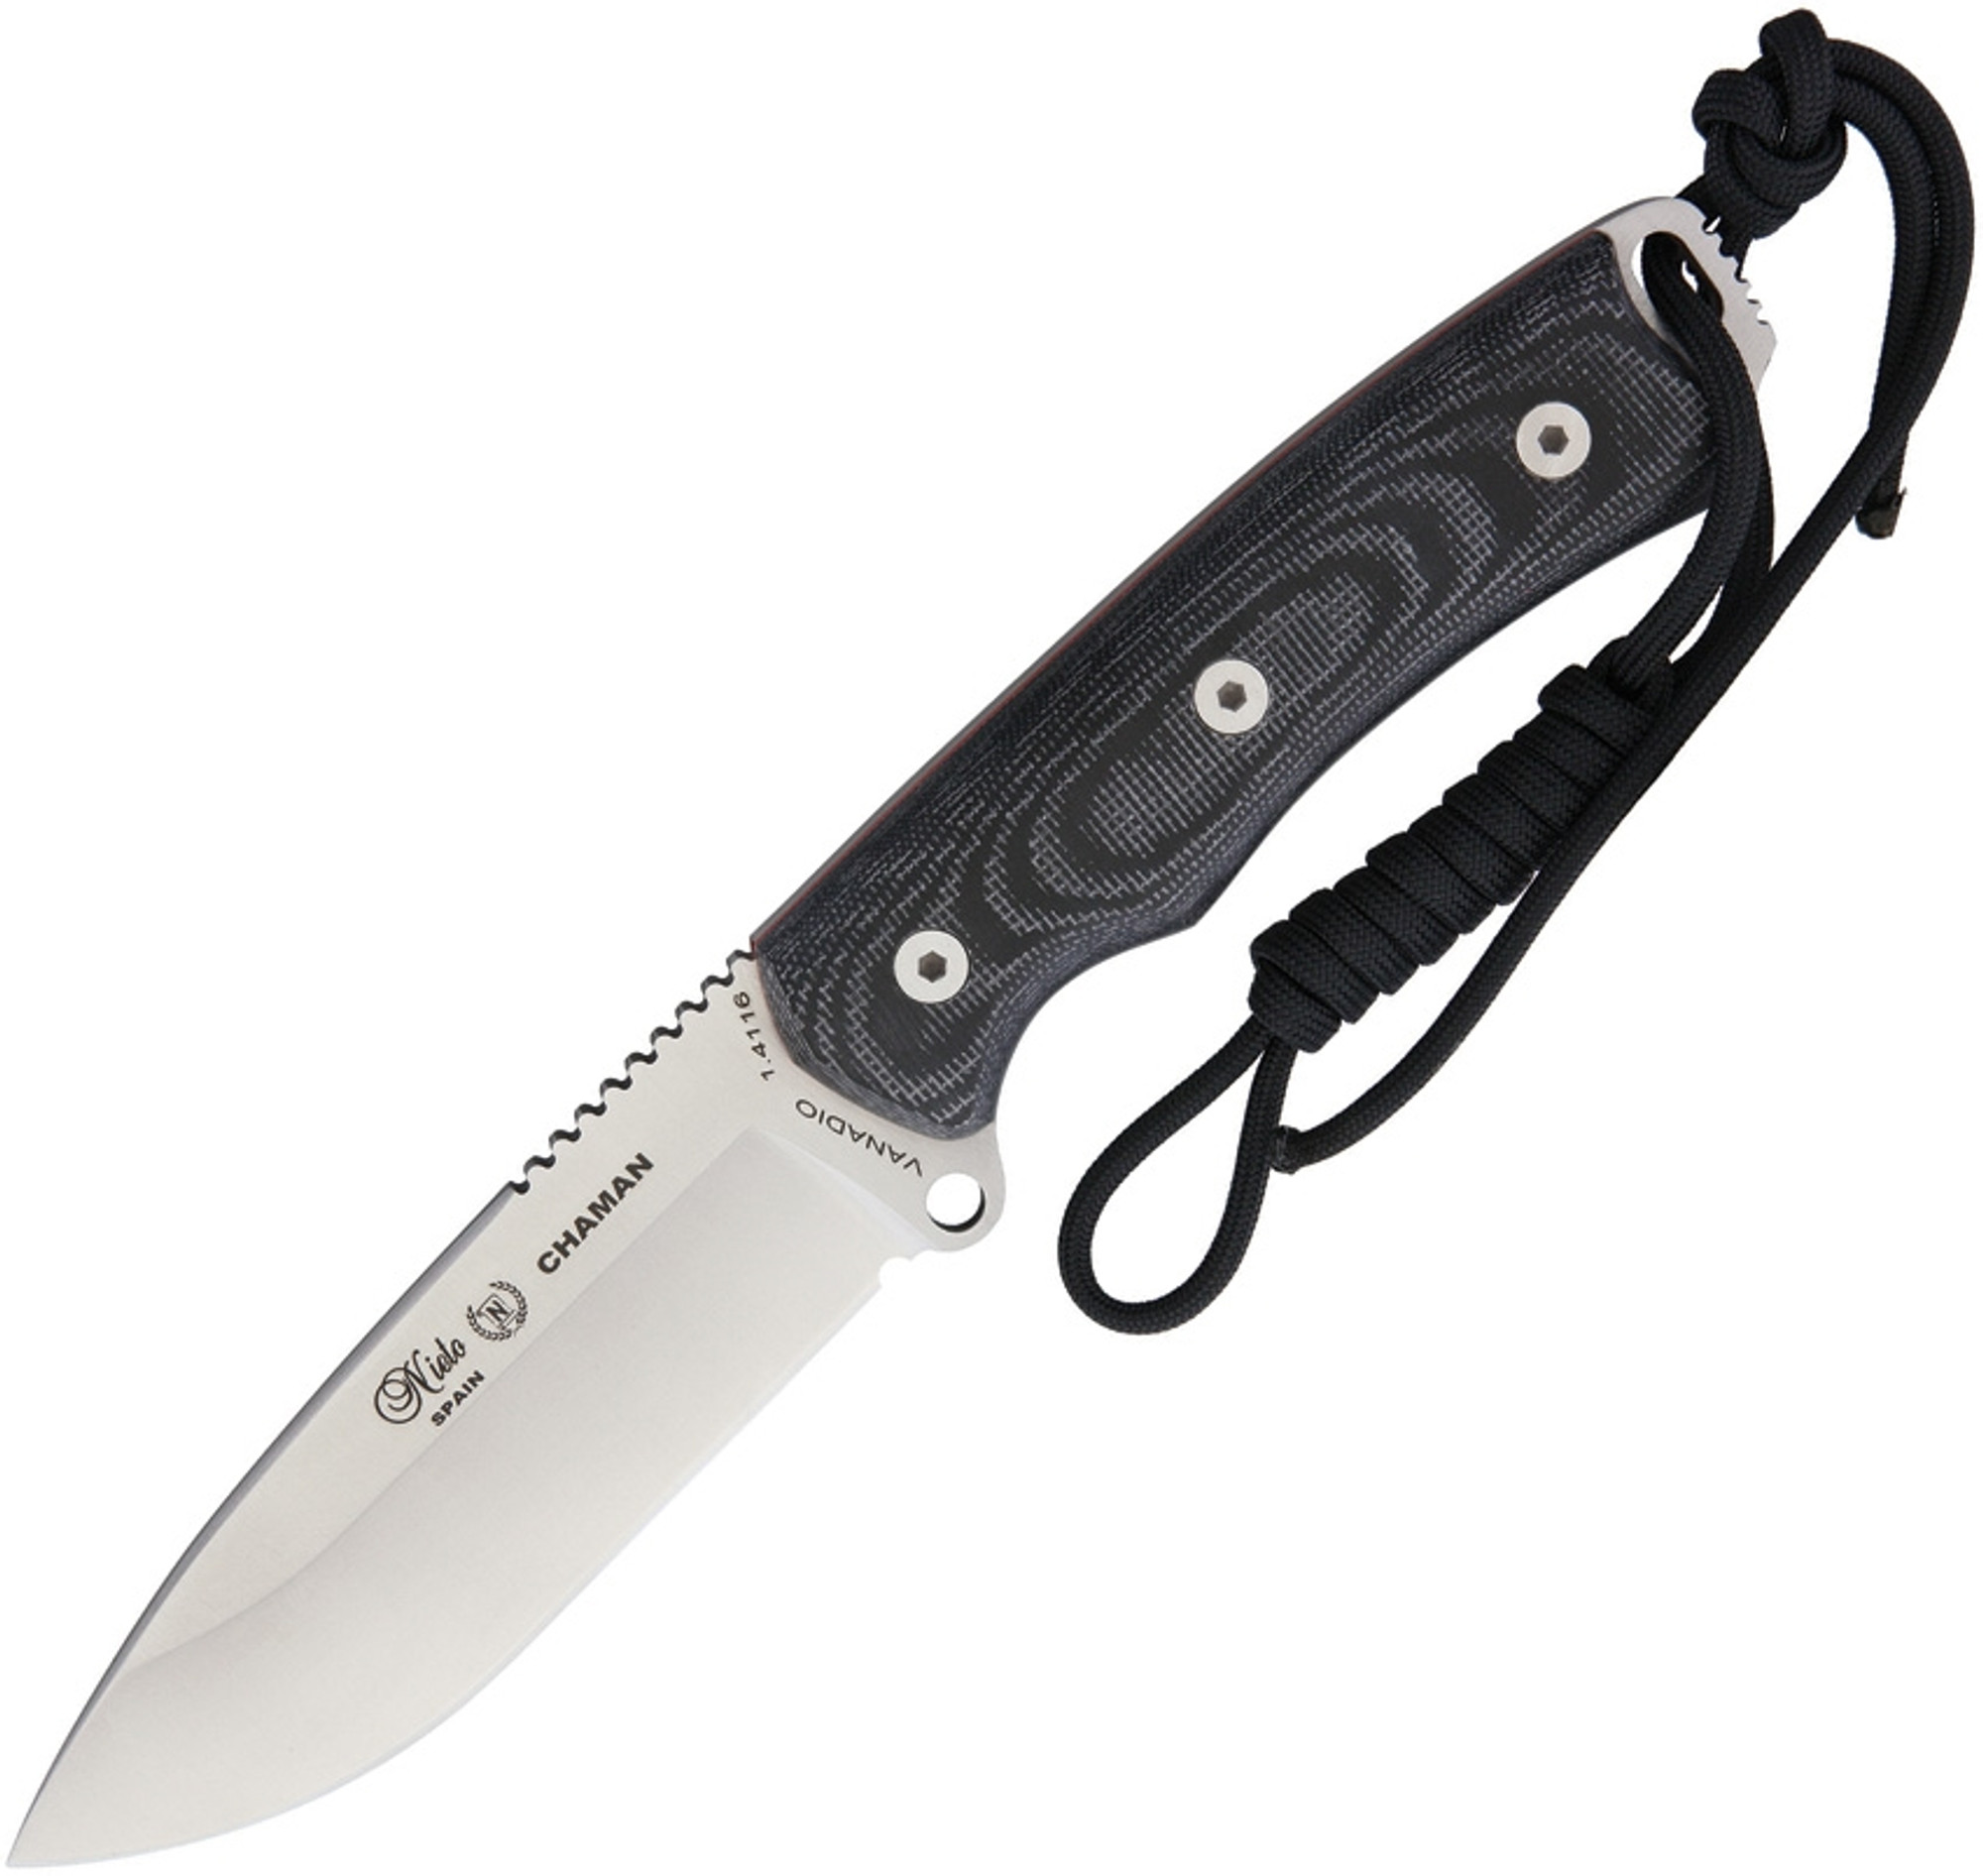 Chaman Knife & Survival Kit